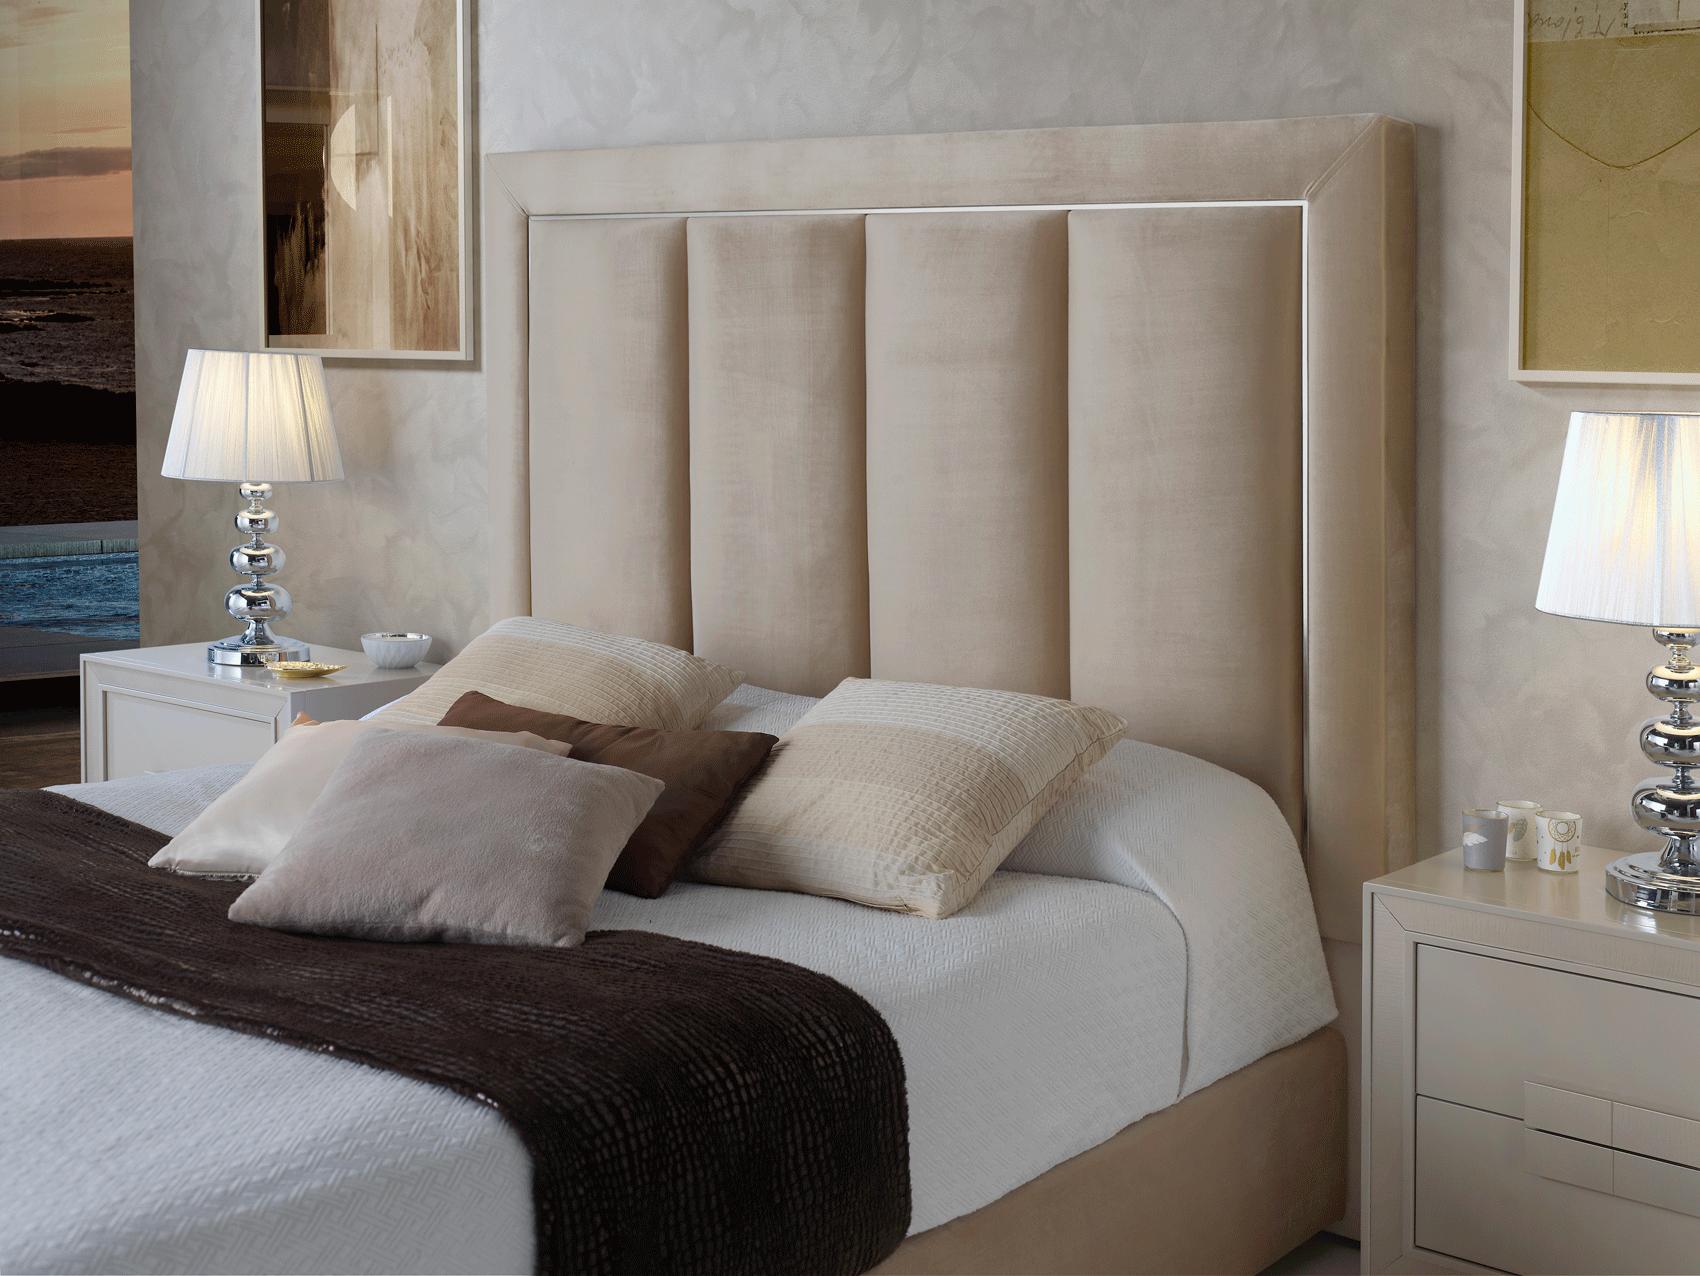 

    
Premium Beige Microfiber Upholstery King Bedroom Set 3Pcs Made in Spain ESF Monica
